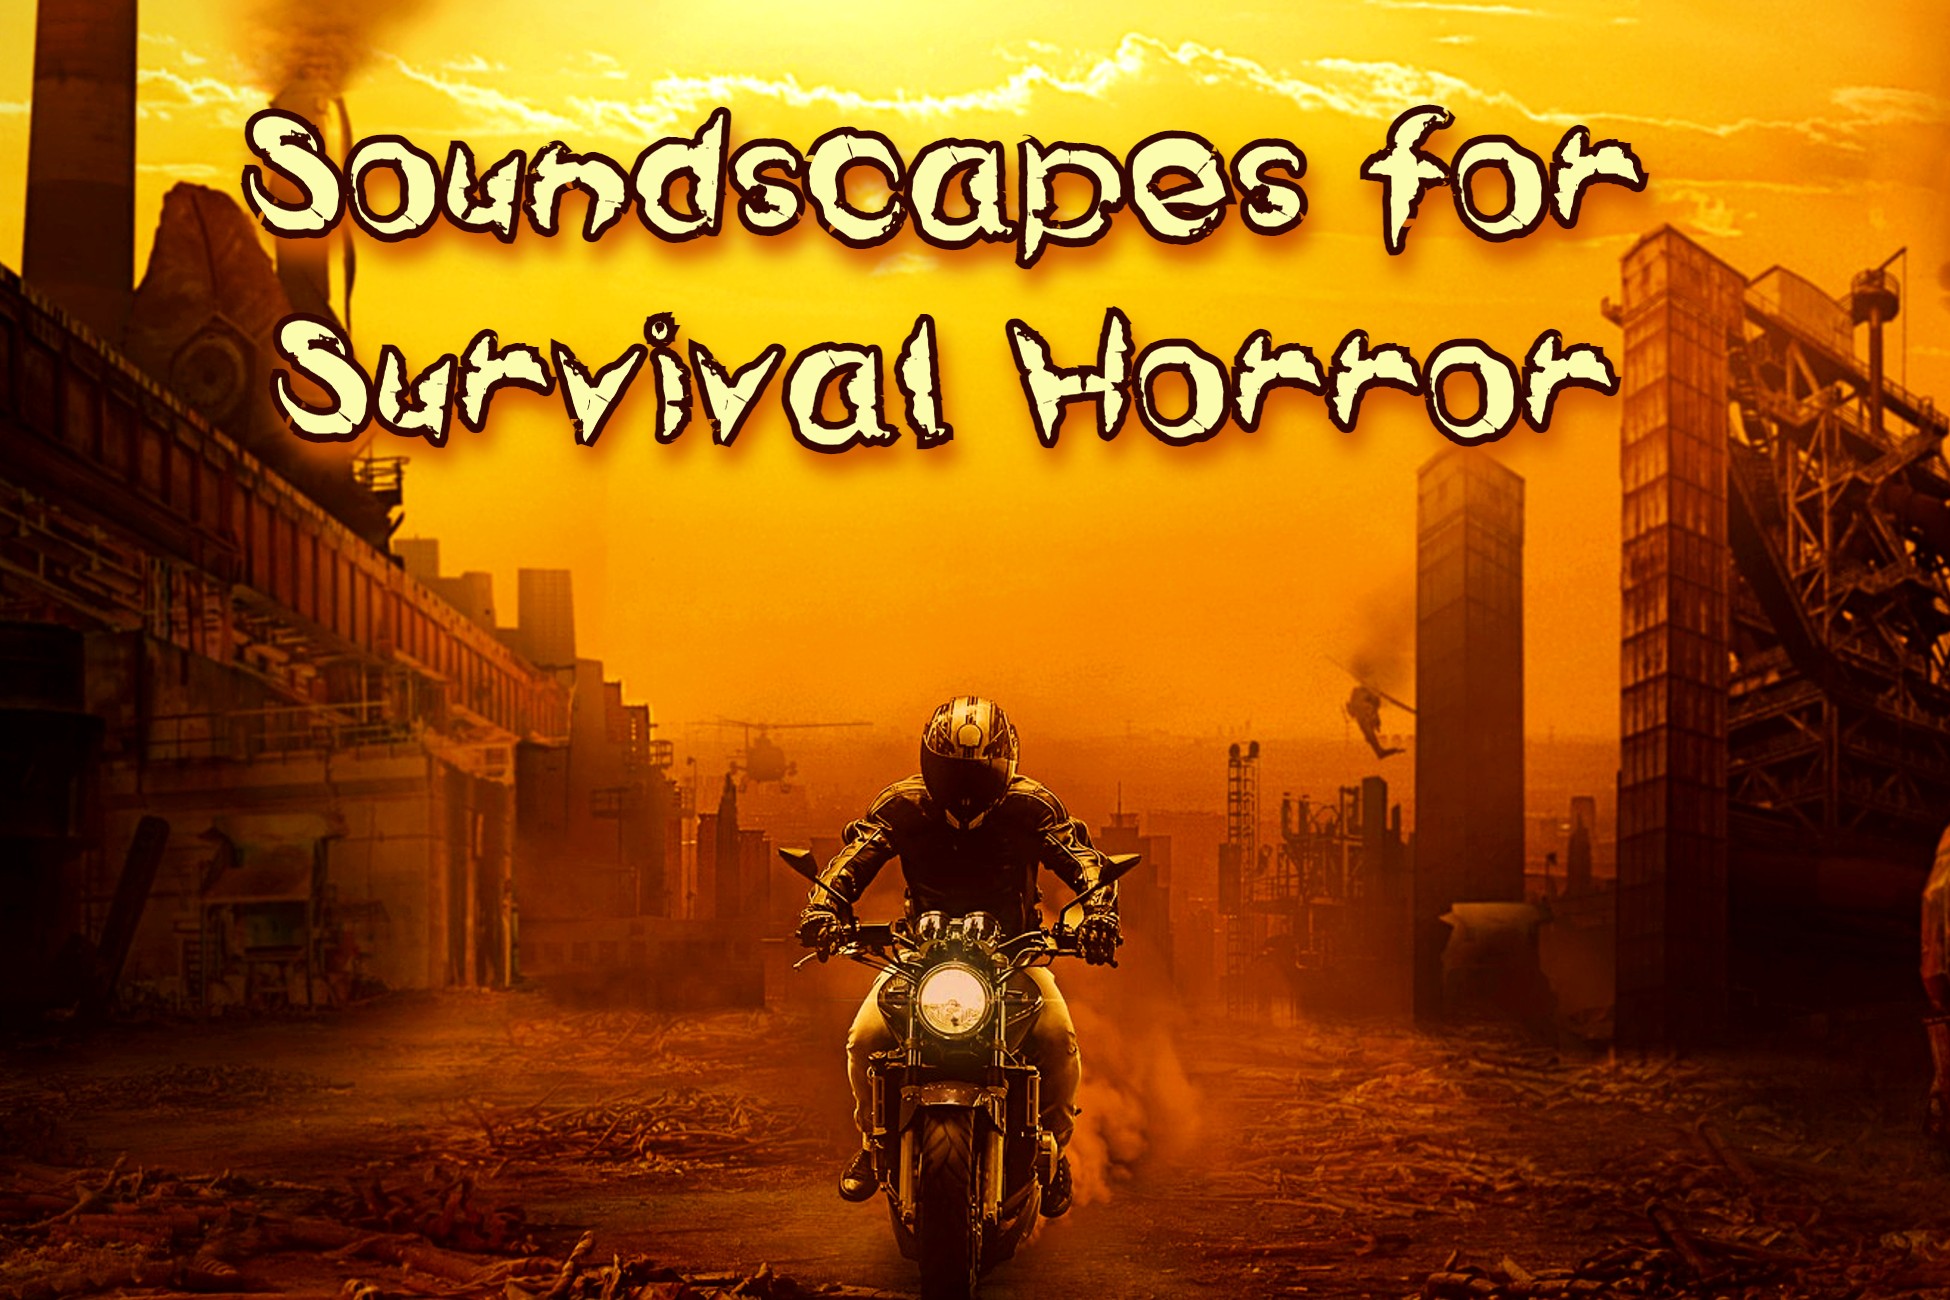 Soundscapes for Survival Horror